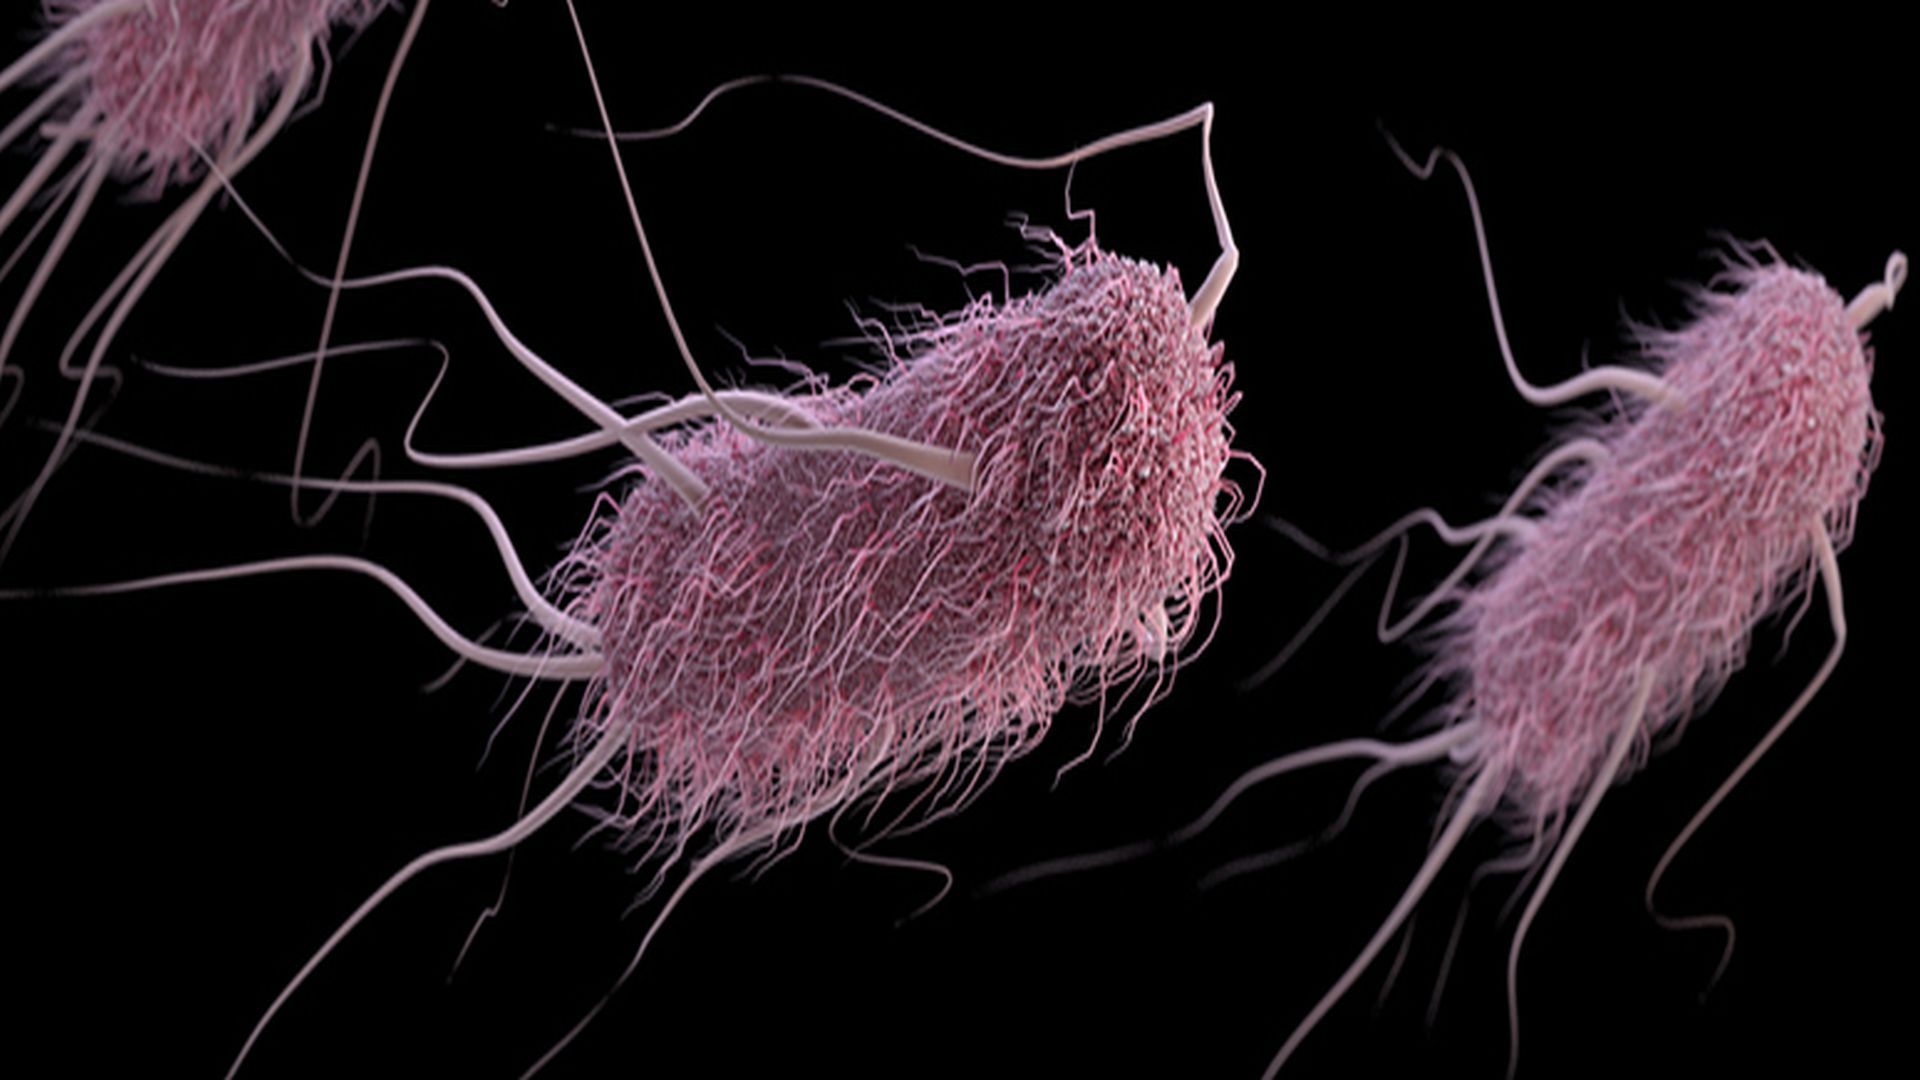 CDC Provides Update on Multistate Outbreak of E. coli O157H7